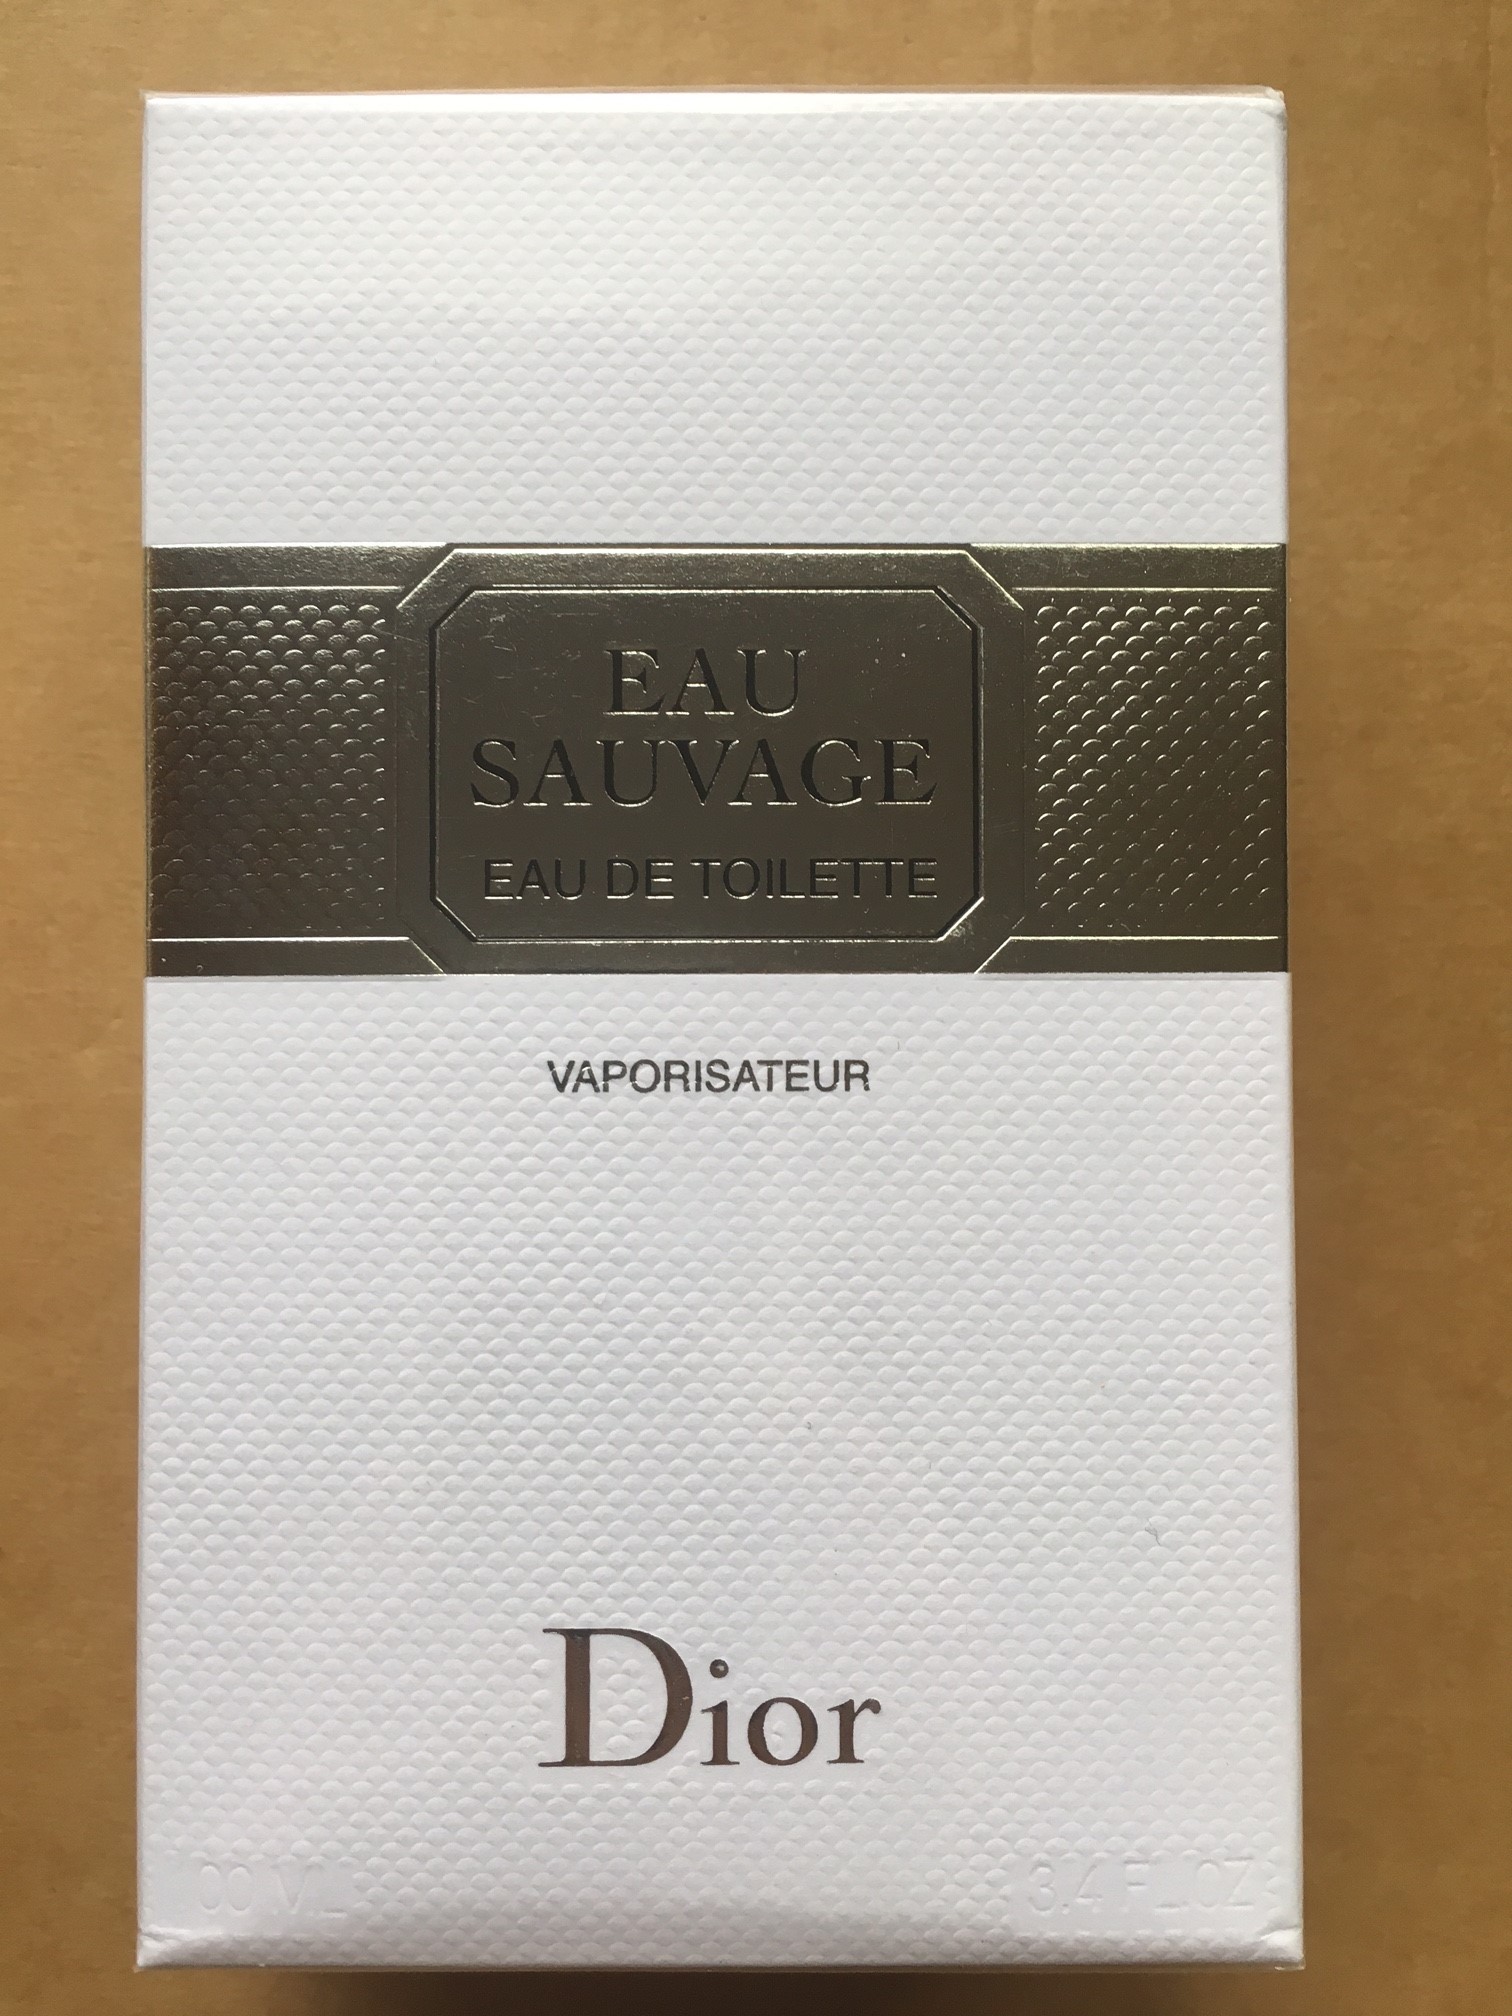 MEAUSAUVAGE3.4EDTSPR 3.4 oz EAU DE TOILETTE Parfum Spray for Men -  Christian Dior